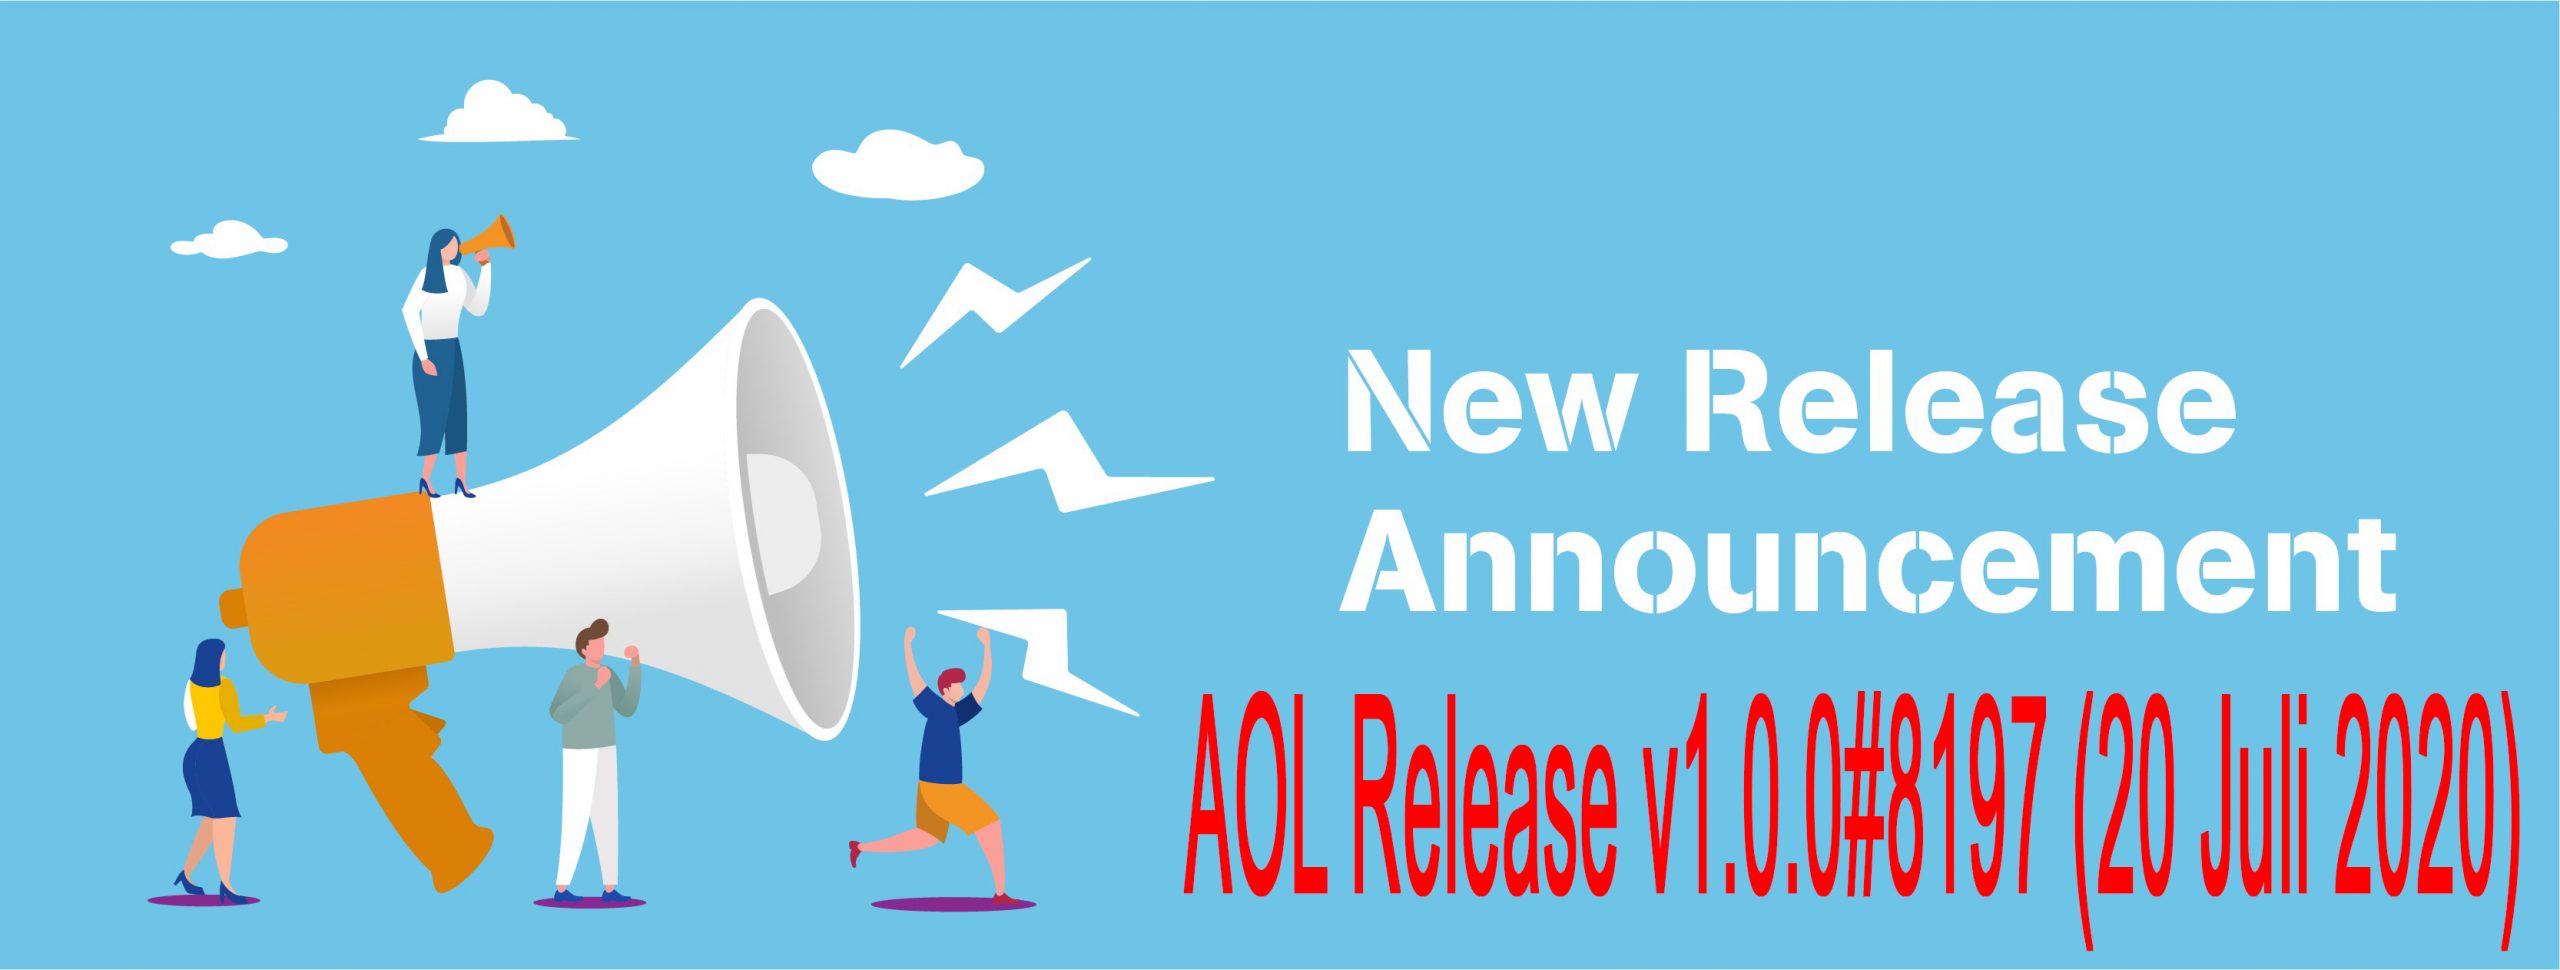 Accurate Online Release v1.0.0#8197 (20 Juli 2020)